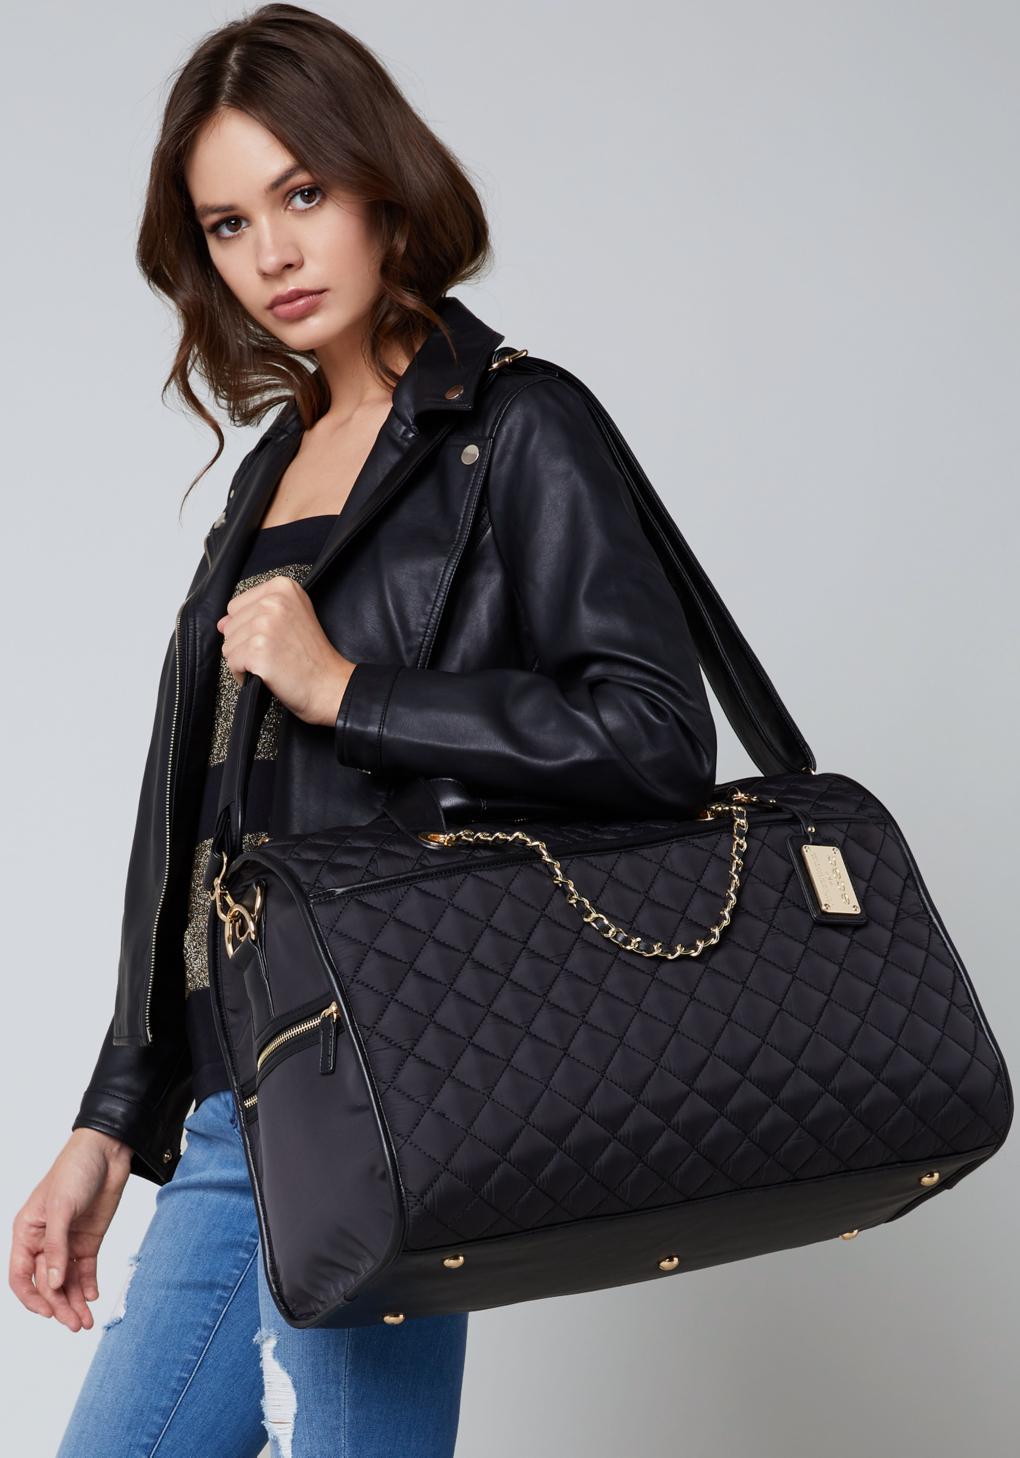 New BEBE Ariana Black Velvet Weekender Large Satchel Hand Bag Travel Purse $149